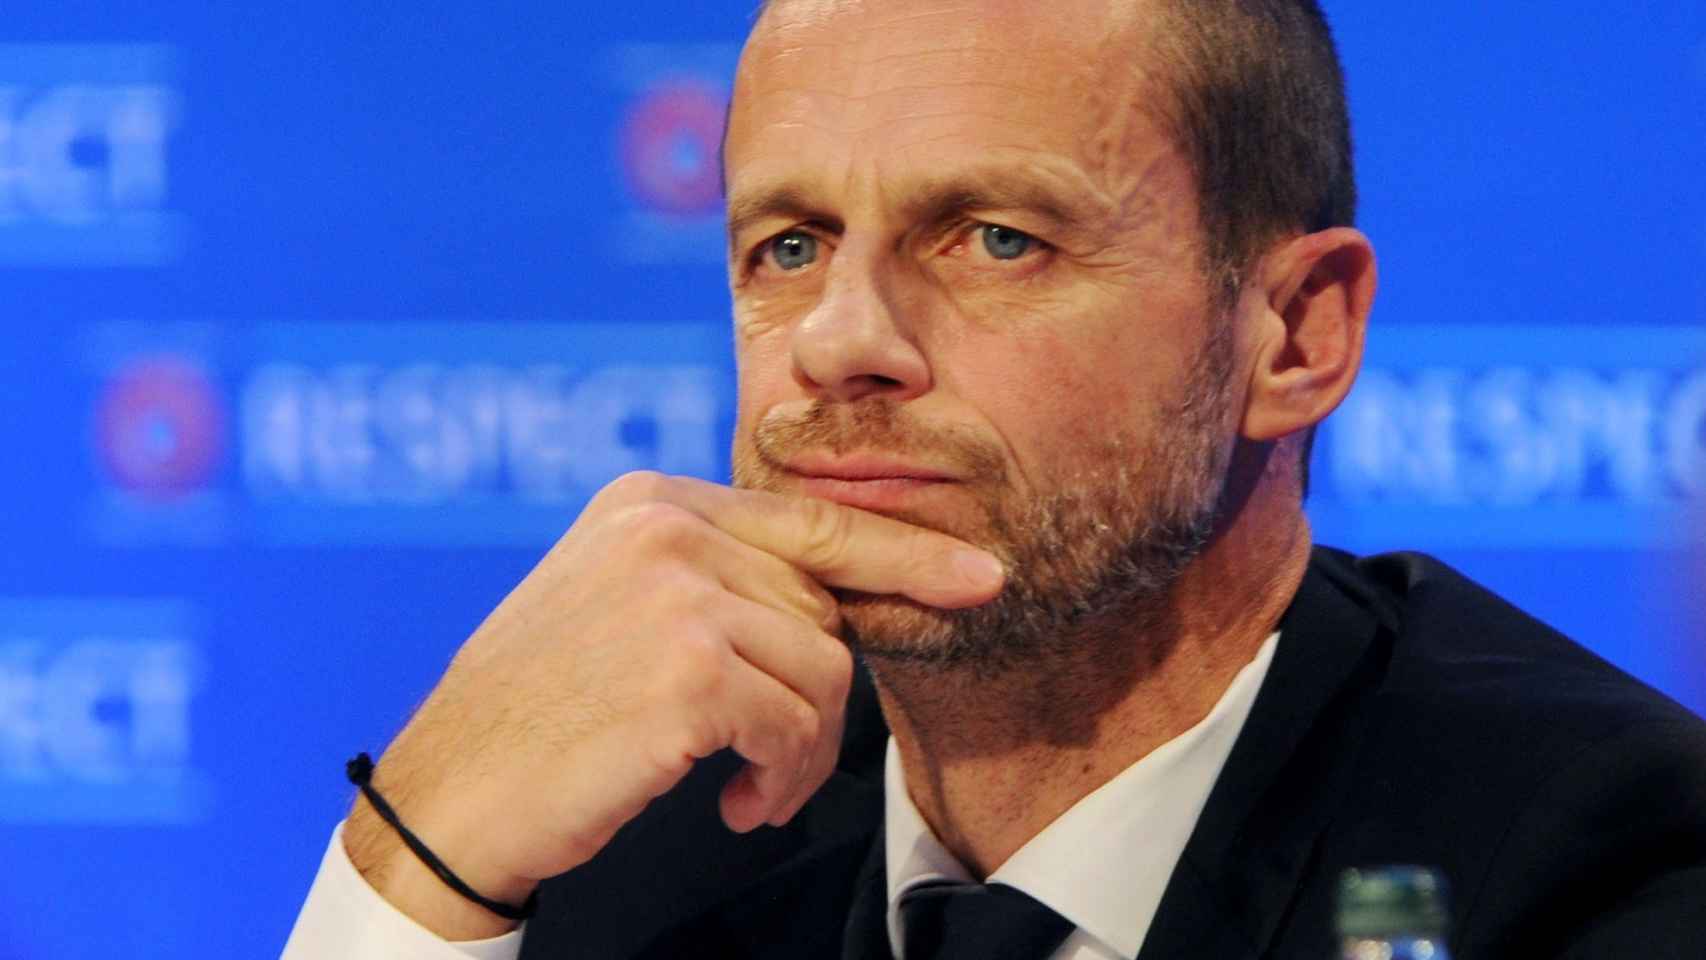 Aleksander Ceferin, presidente de la UEFA